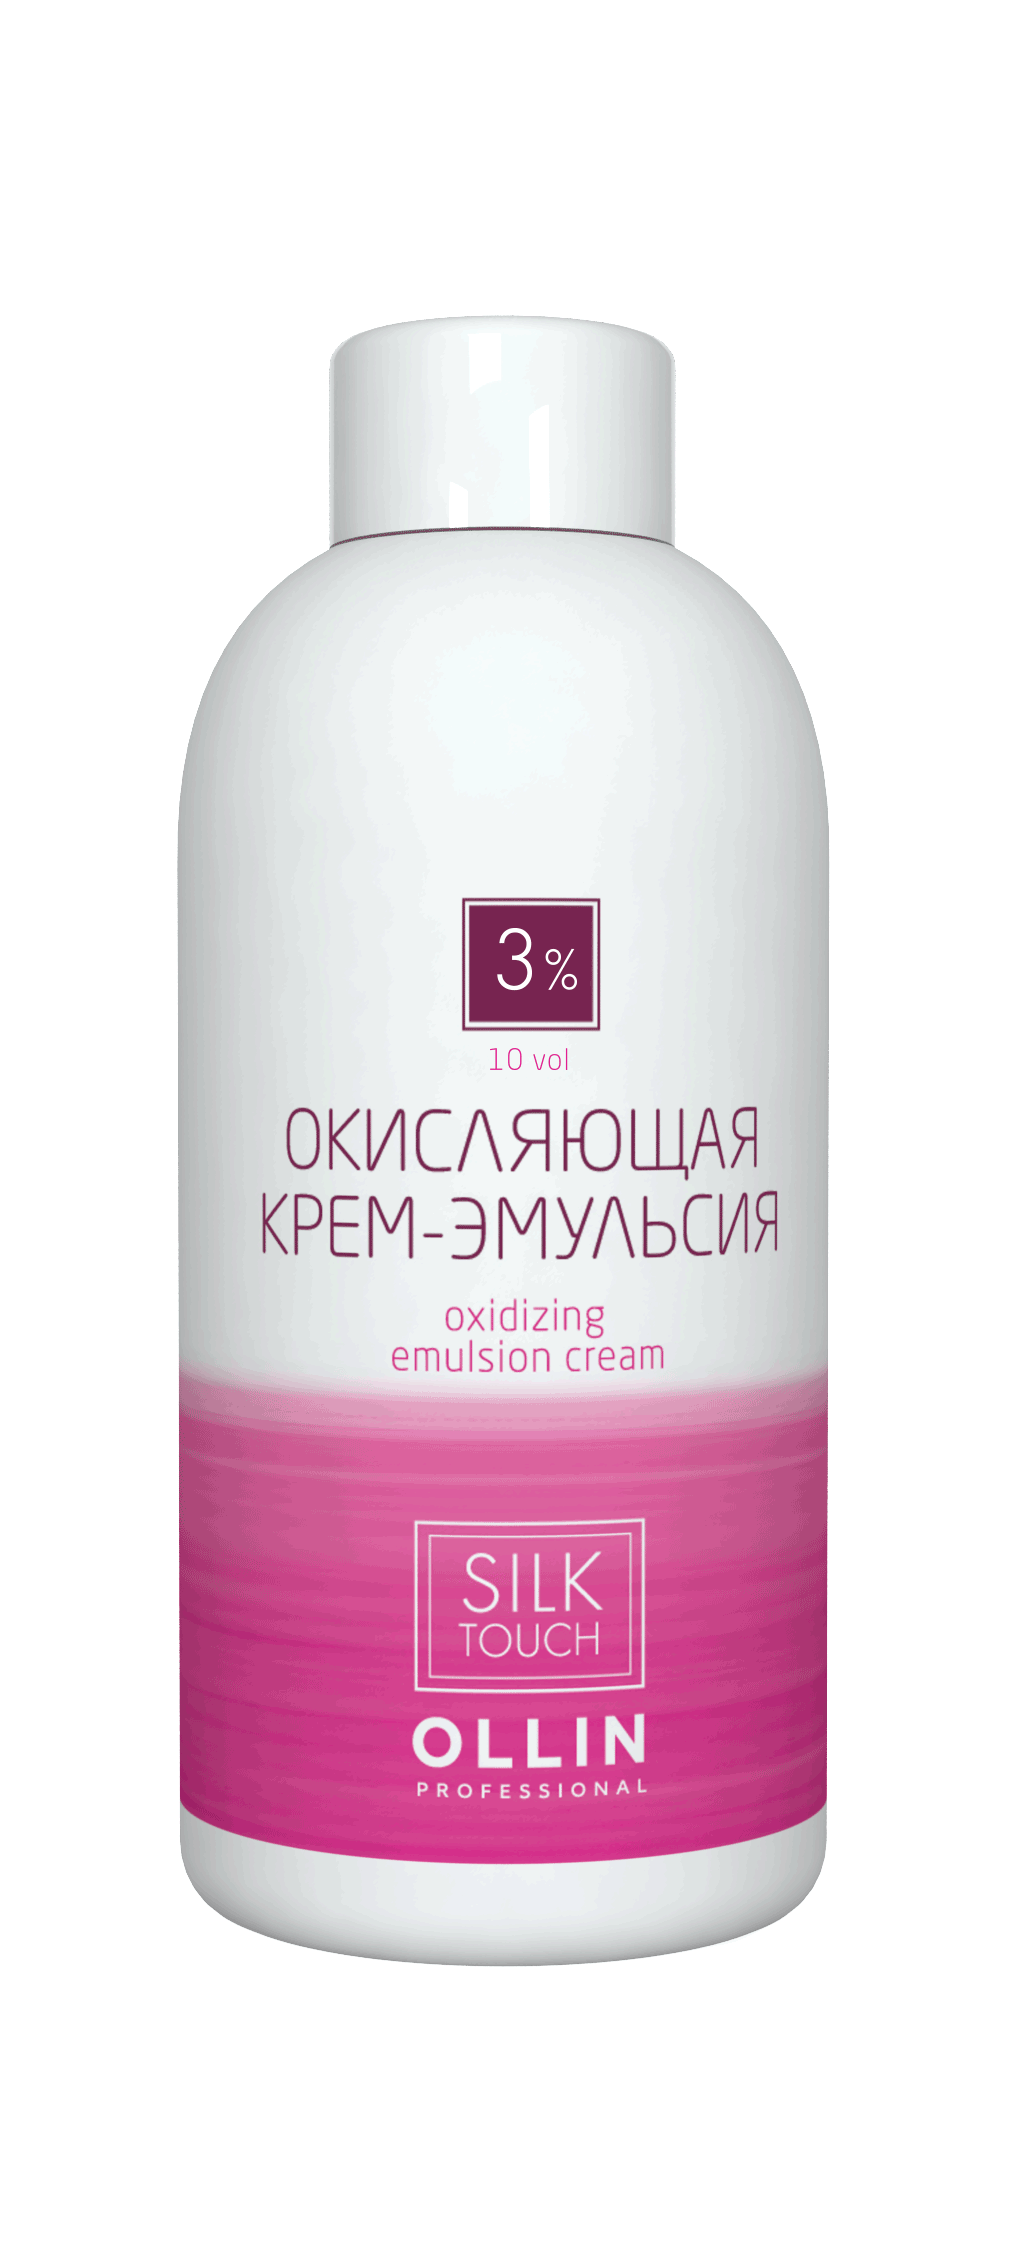 OLLIN silk touch.  МИНИ 3% 10vol. Окисляющая крем-эмульсия 90мл